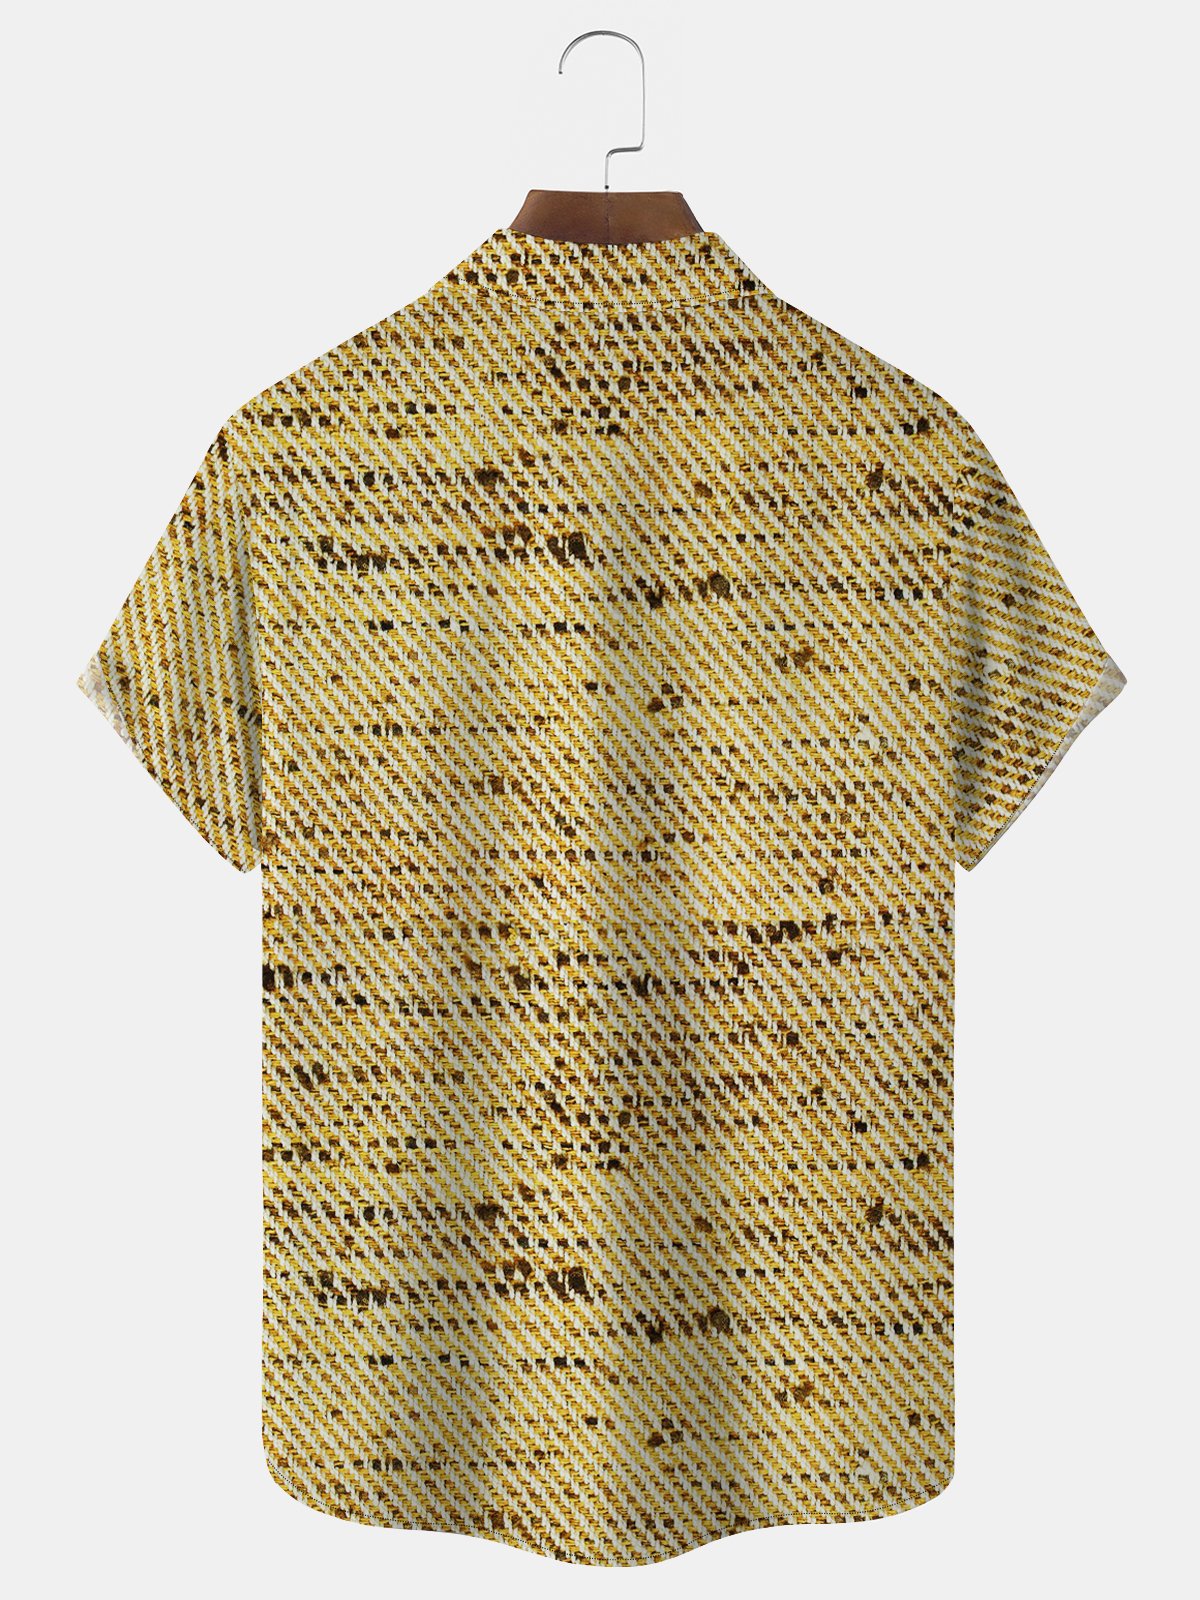 Royaura Vintage Twill Texture Yellow Men's Casual Shirts Stretch Stripe Aloha Camp Pocket Button-Up Shirts